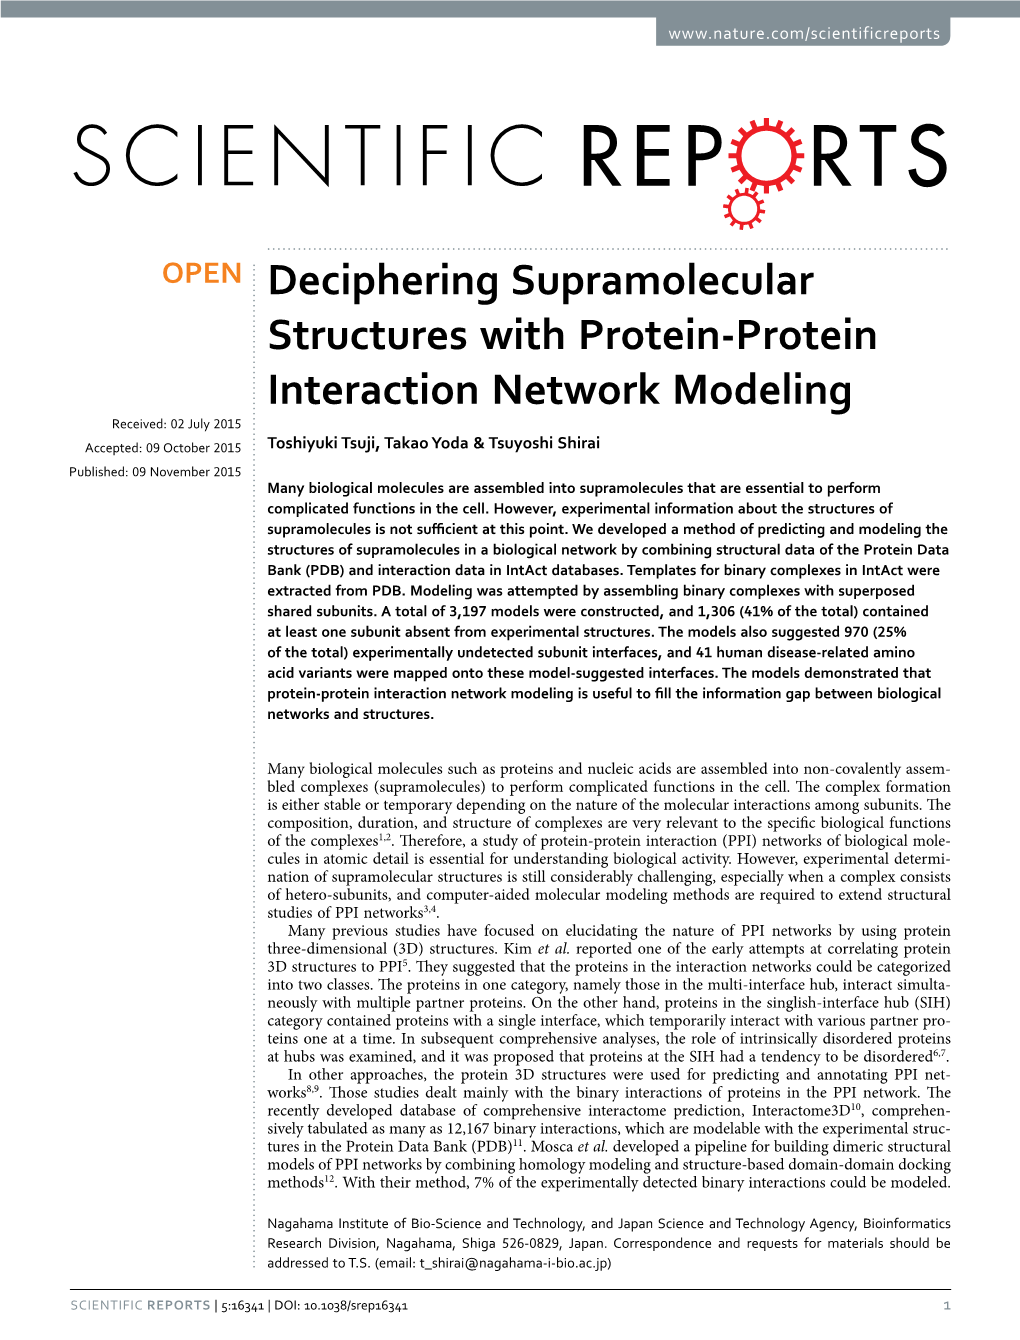 Deciphering Supramolecular Structures with Protein-Protein